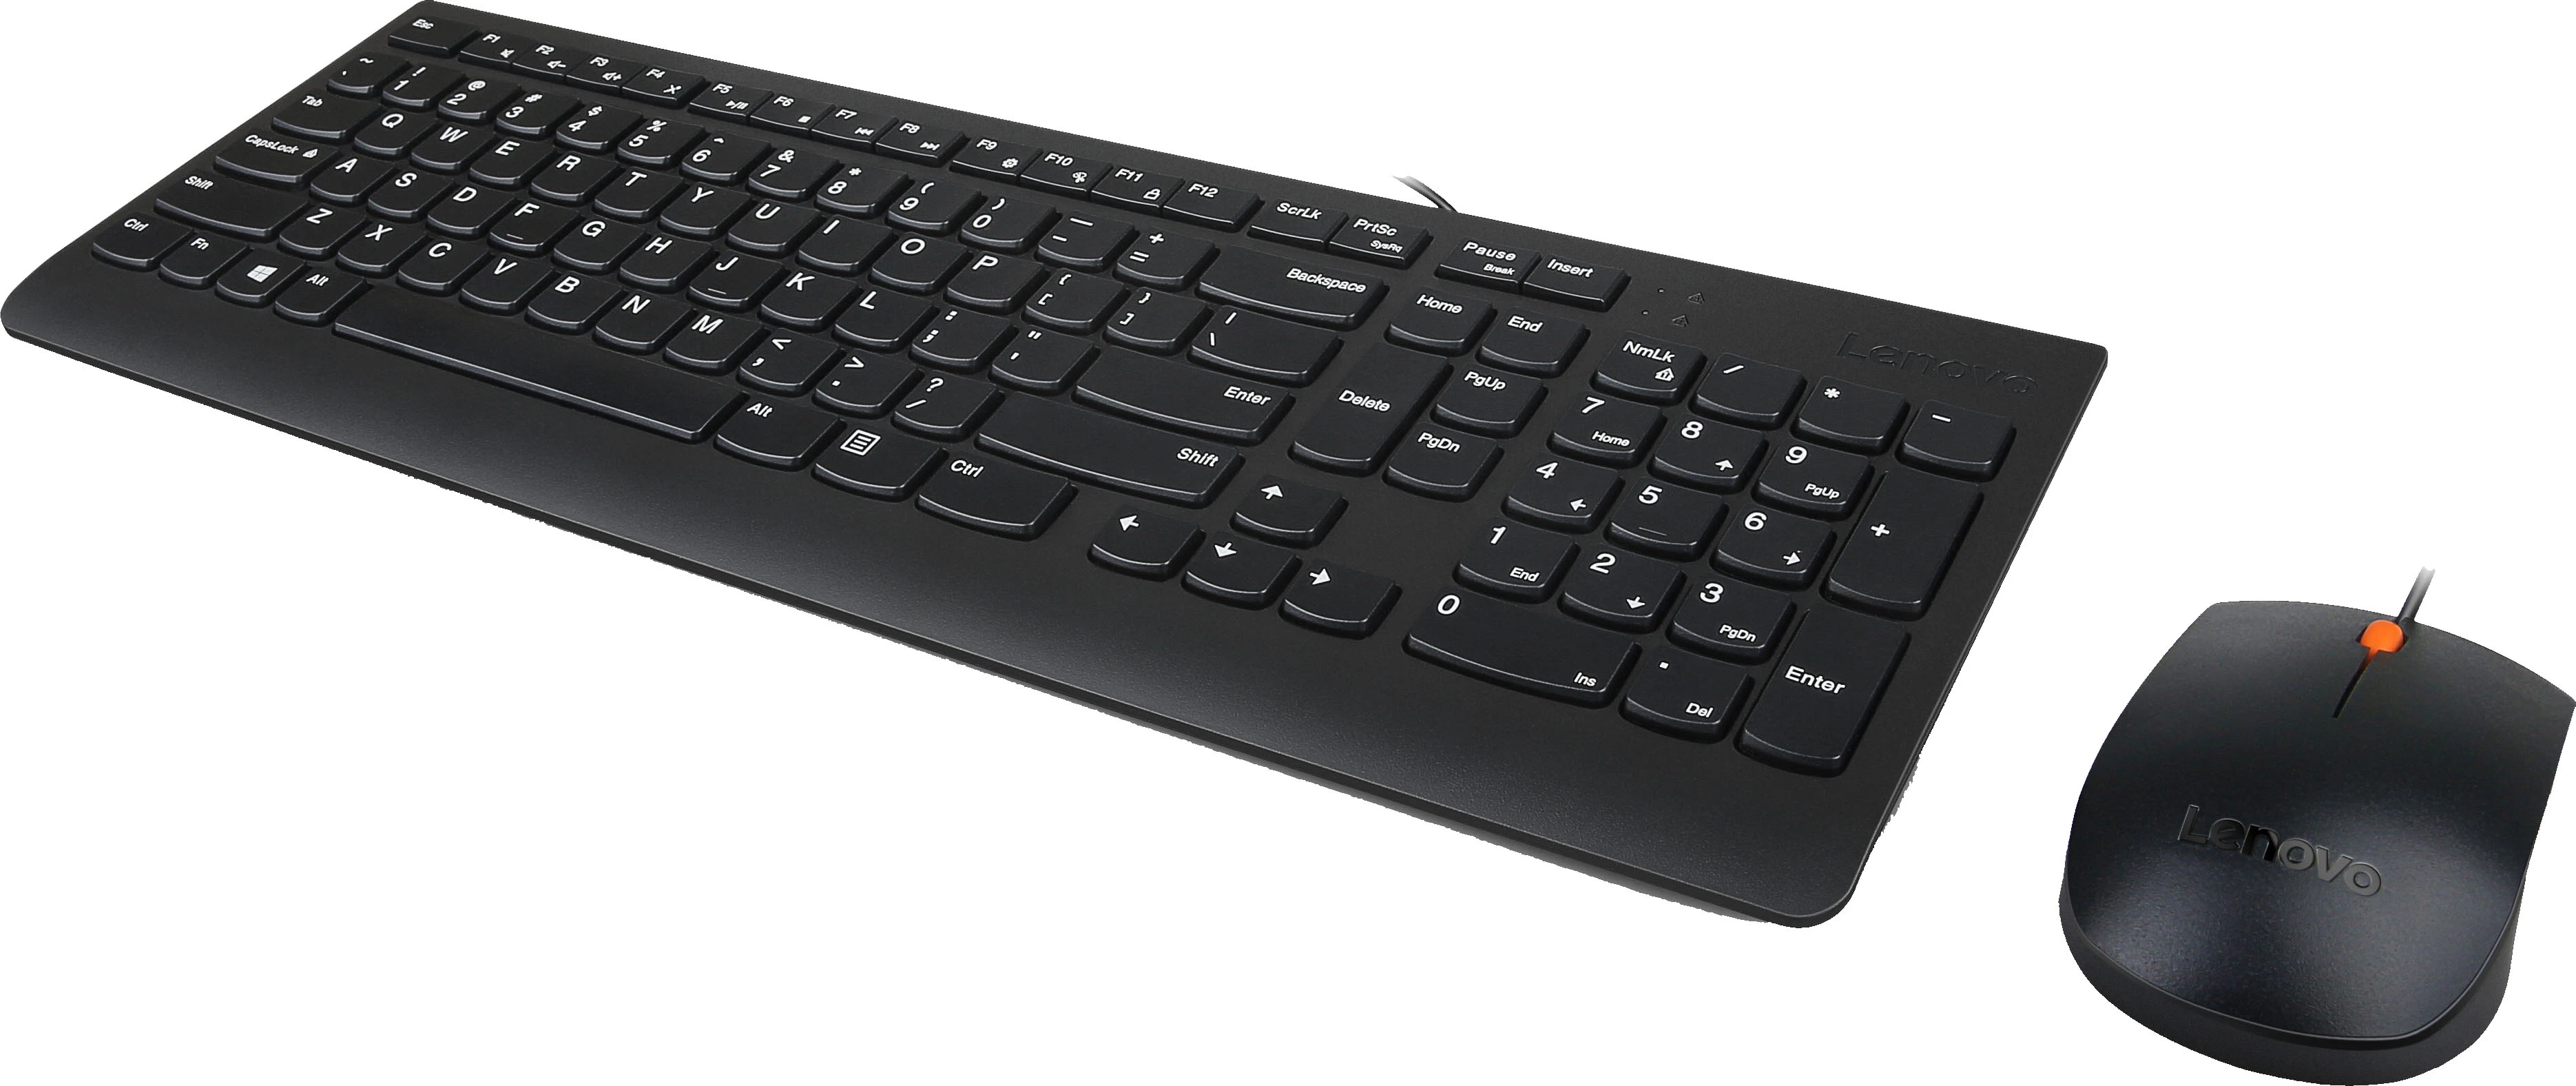 Lenovo 300 USB Combo Keyboard & Mouse - Russian/Cyrillic (441)